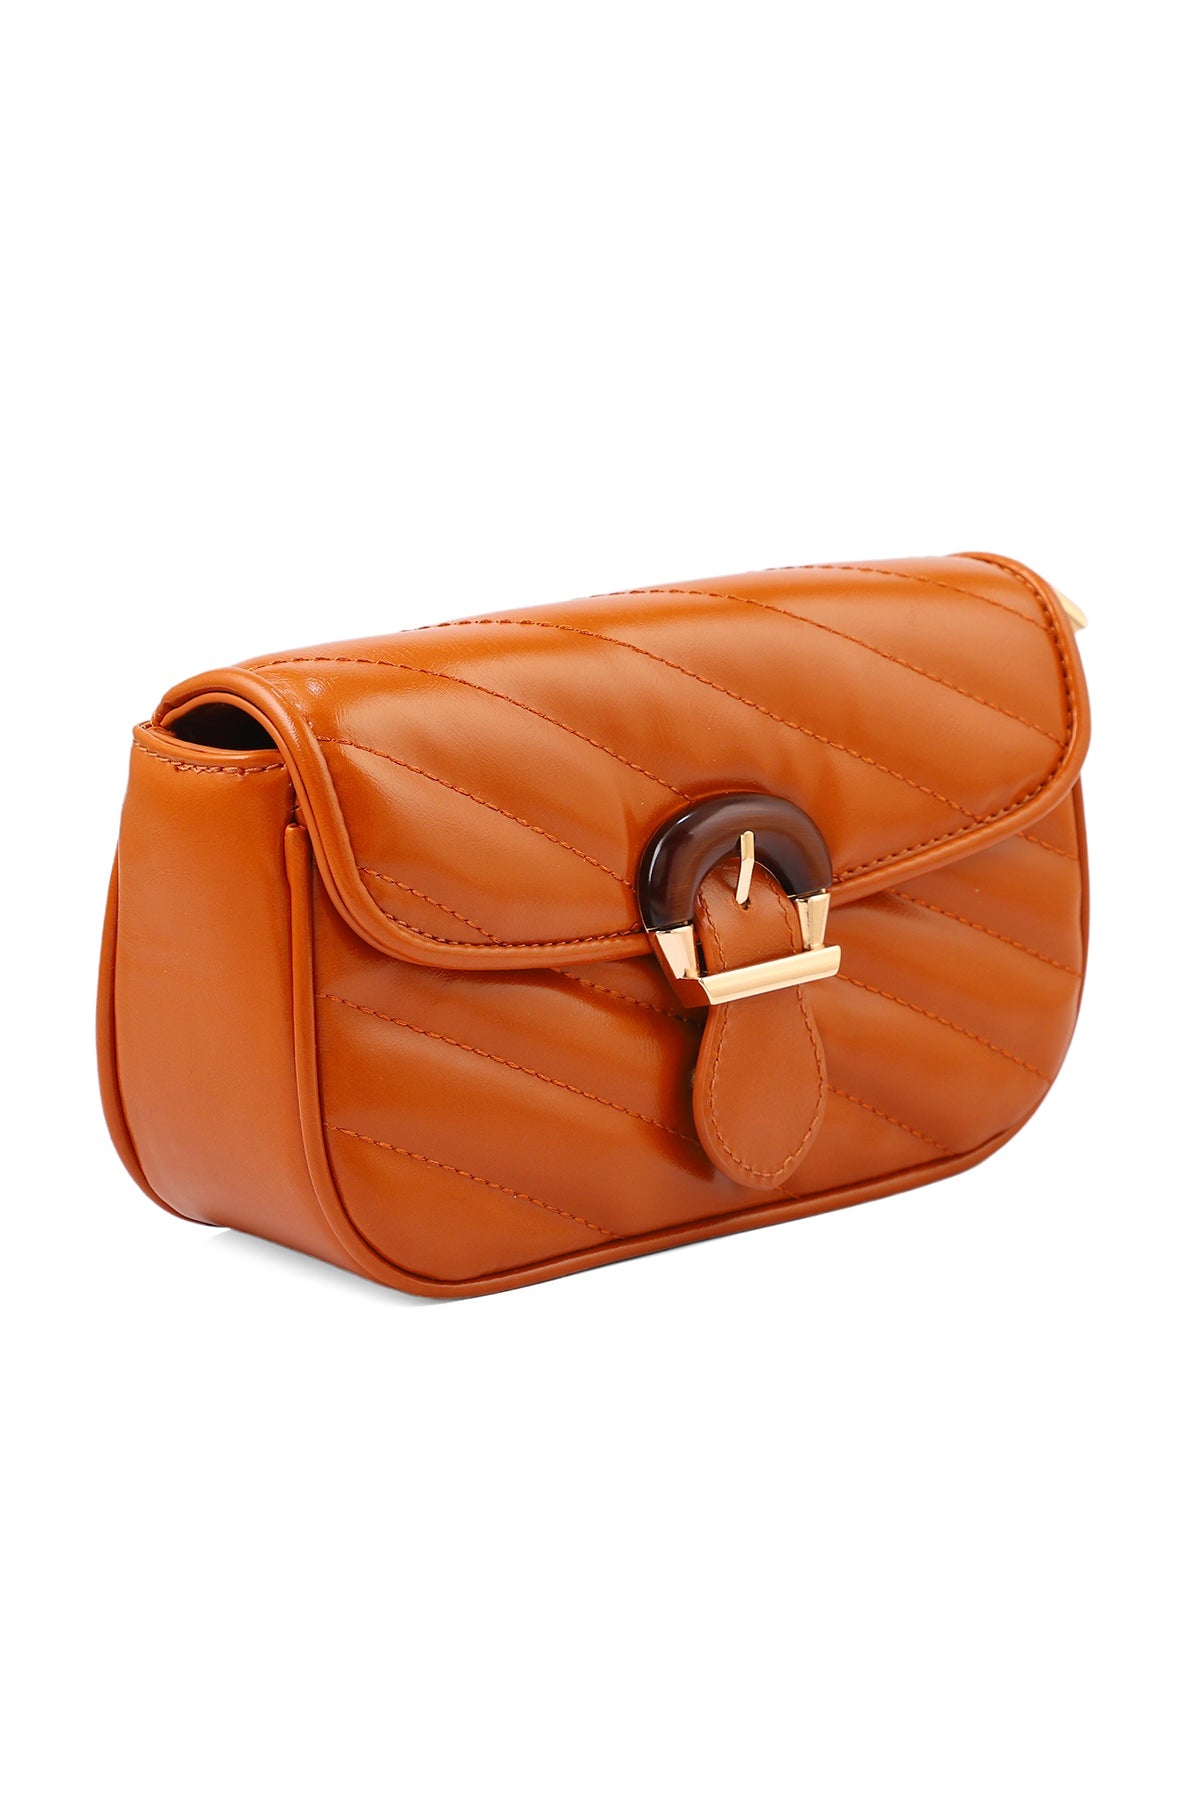 Baguette Shoulder Bags B15085-Brown